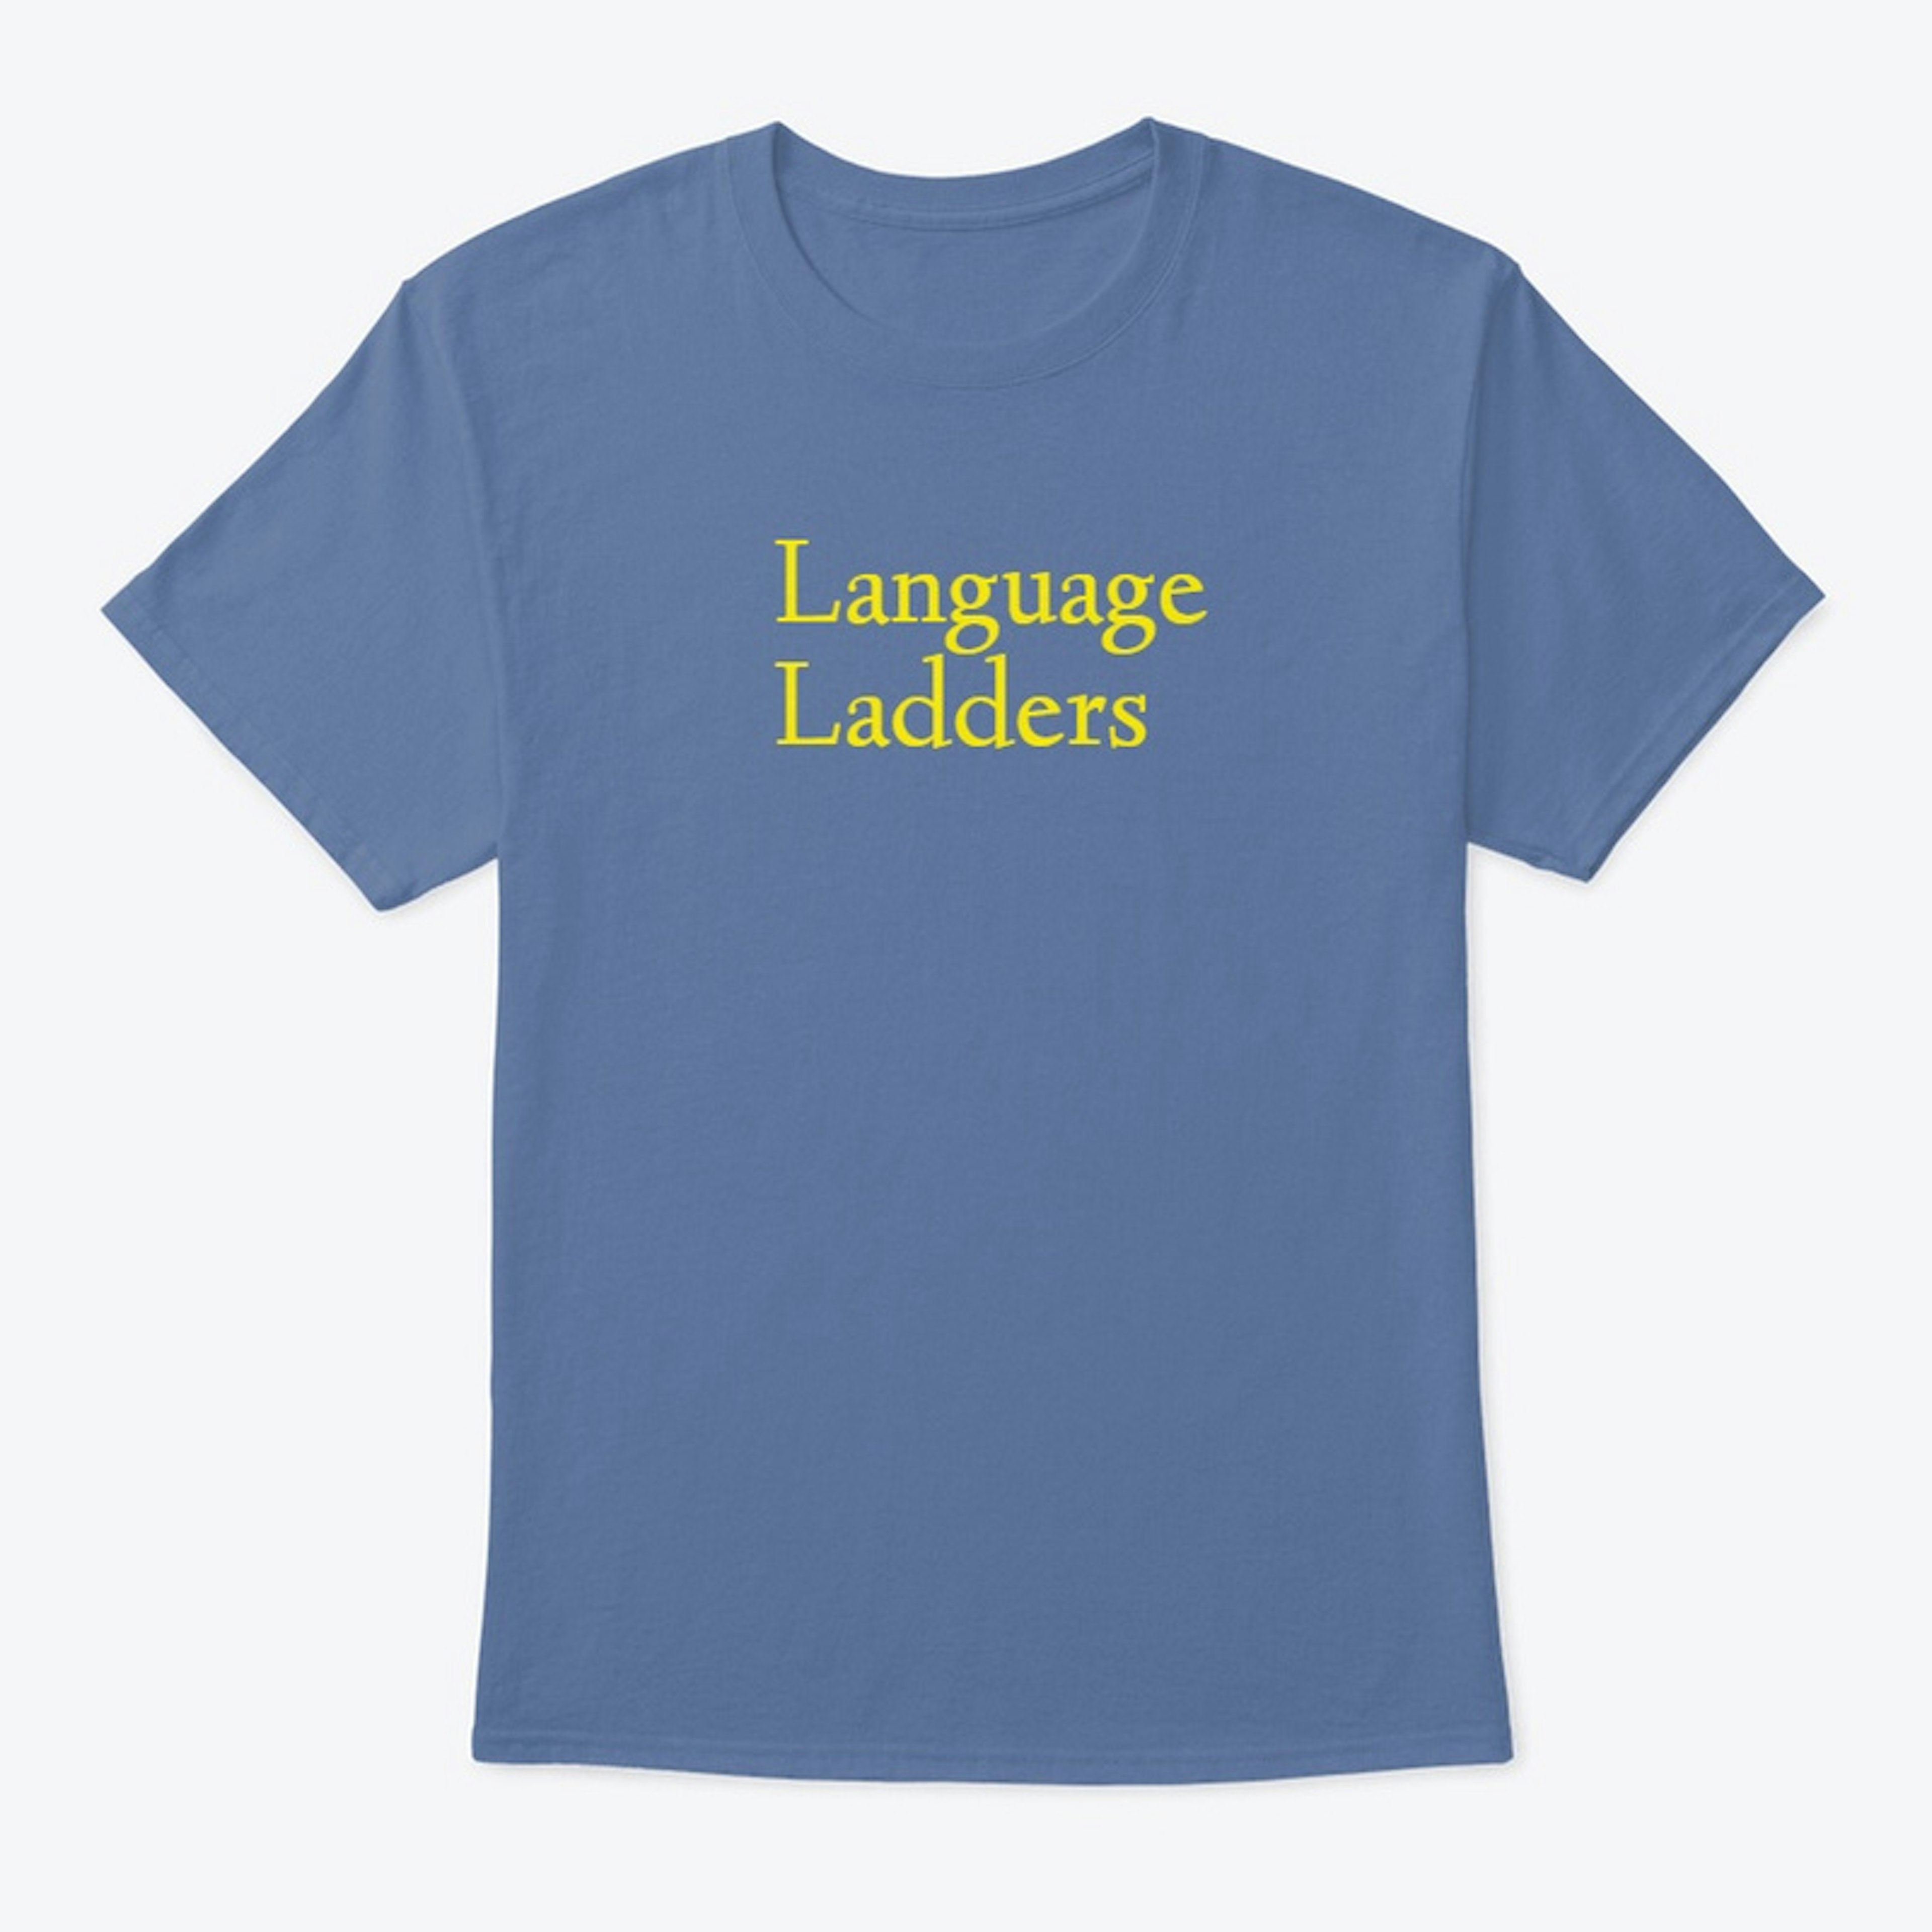 Language Ladders (t-shirt)